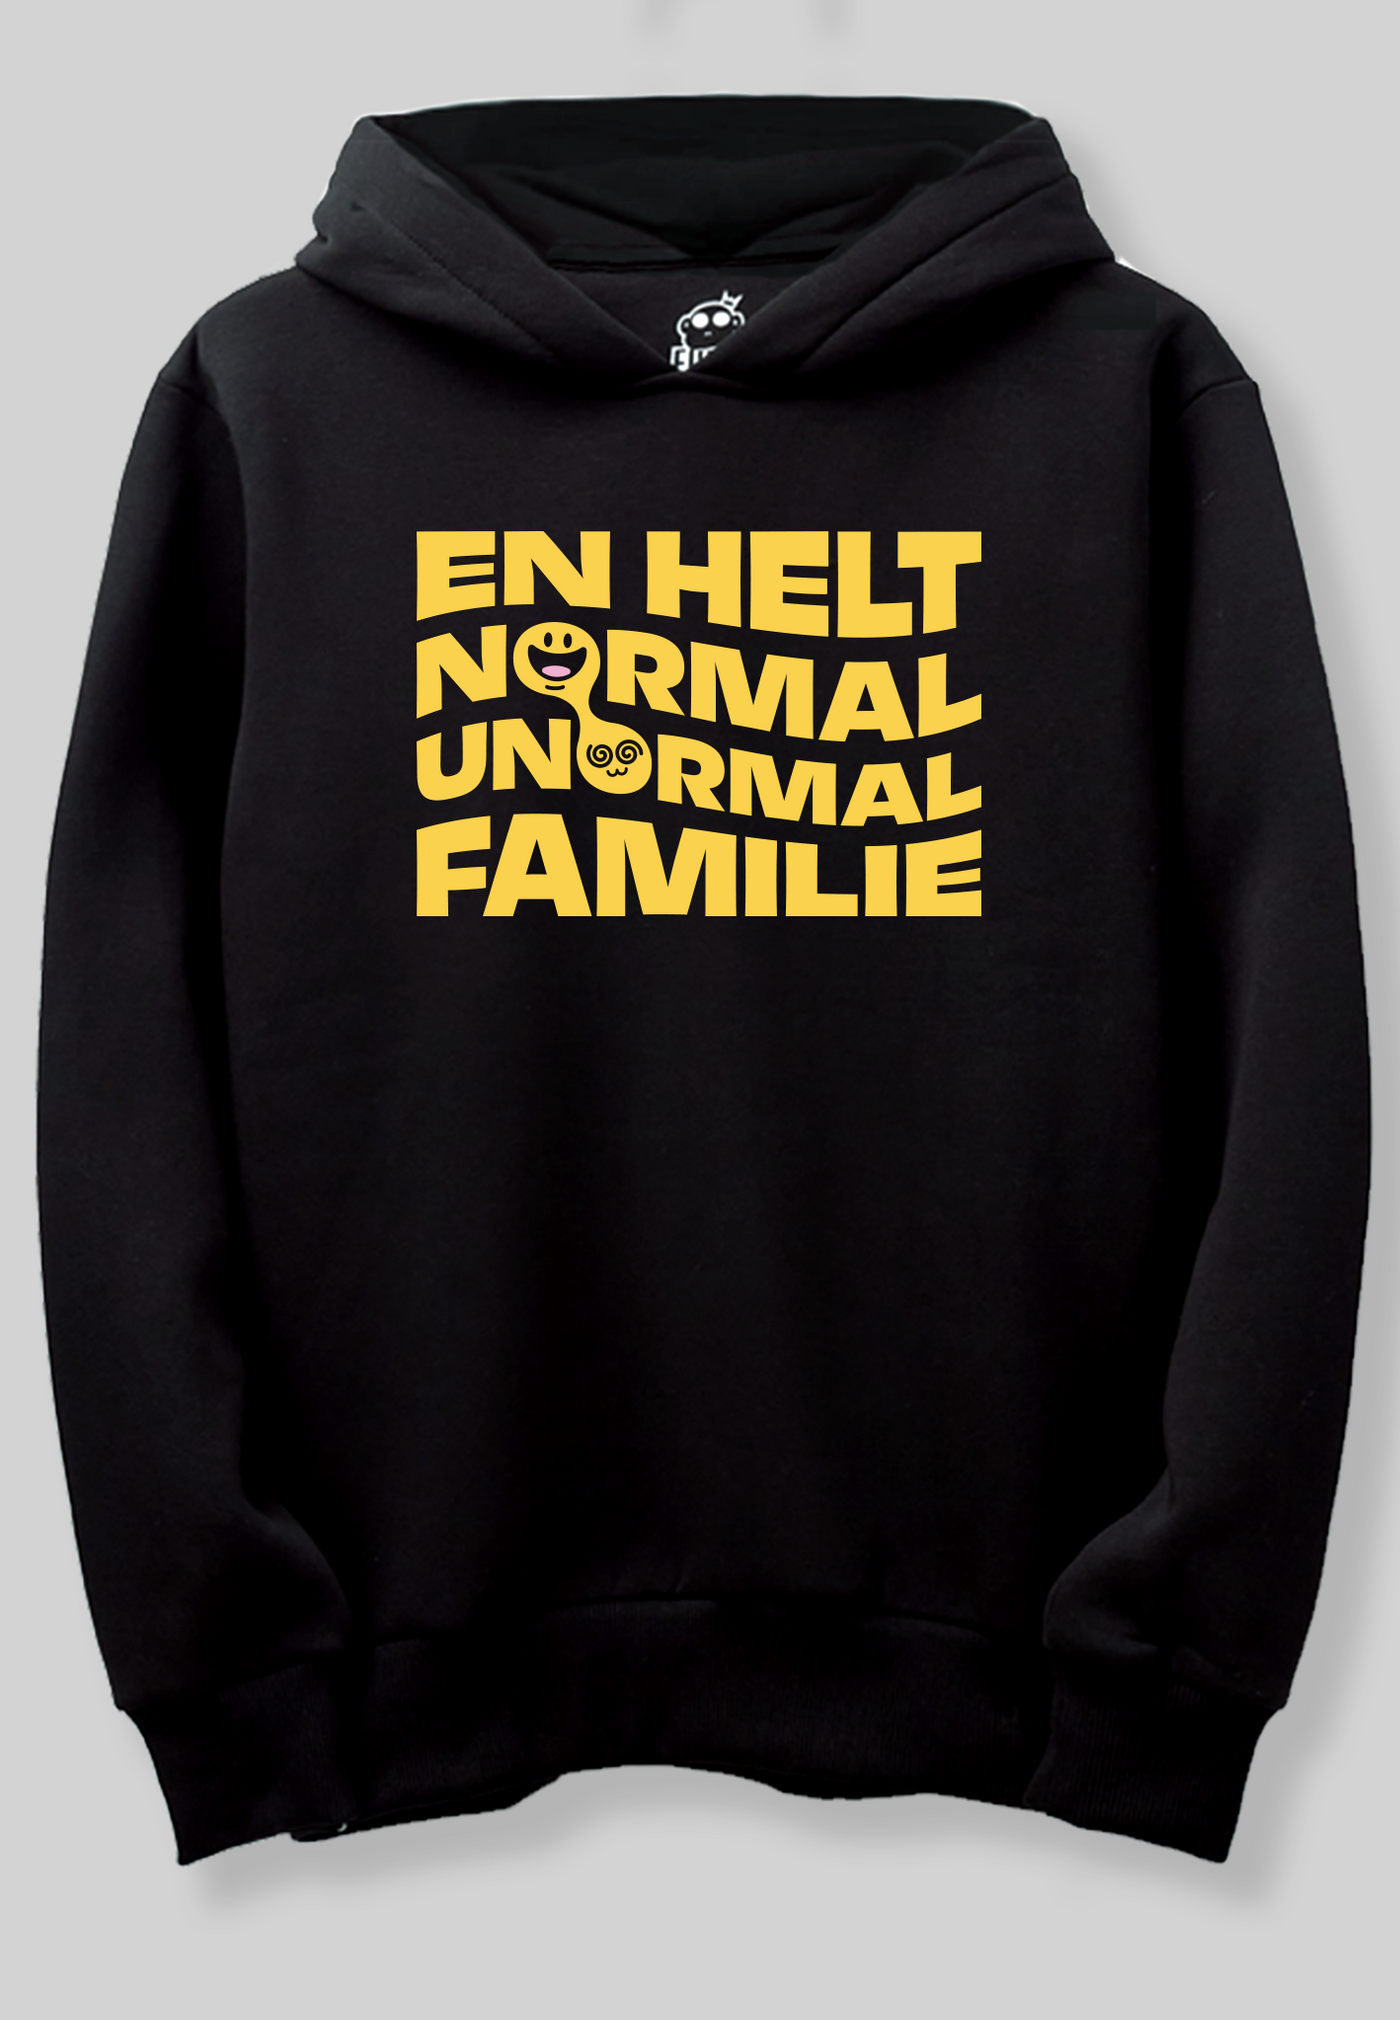 Familien Münster - "NORMAL / ABNORMAL FAMILY" - Black hoodie